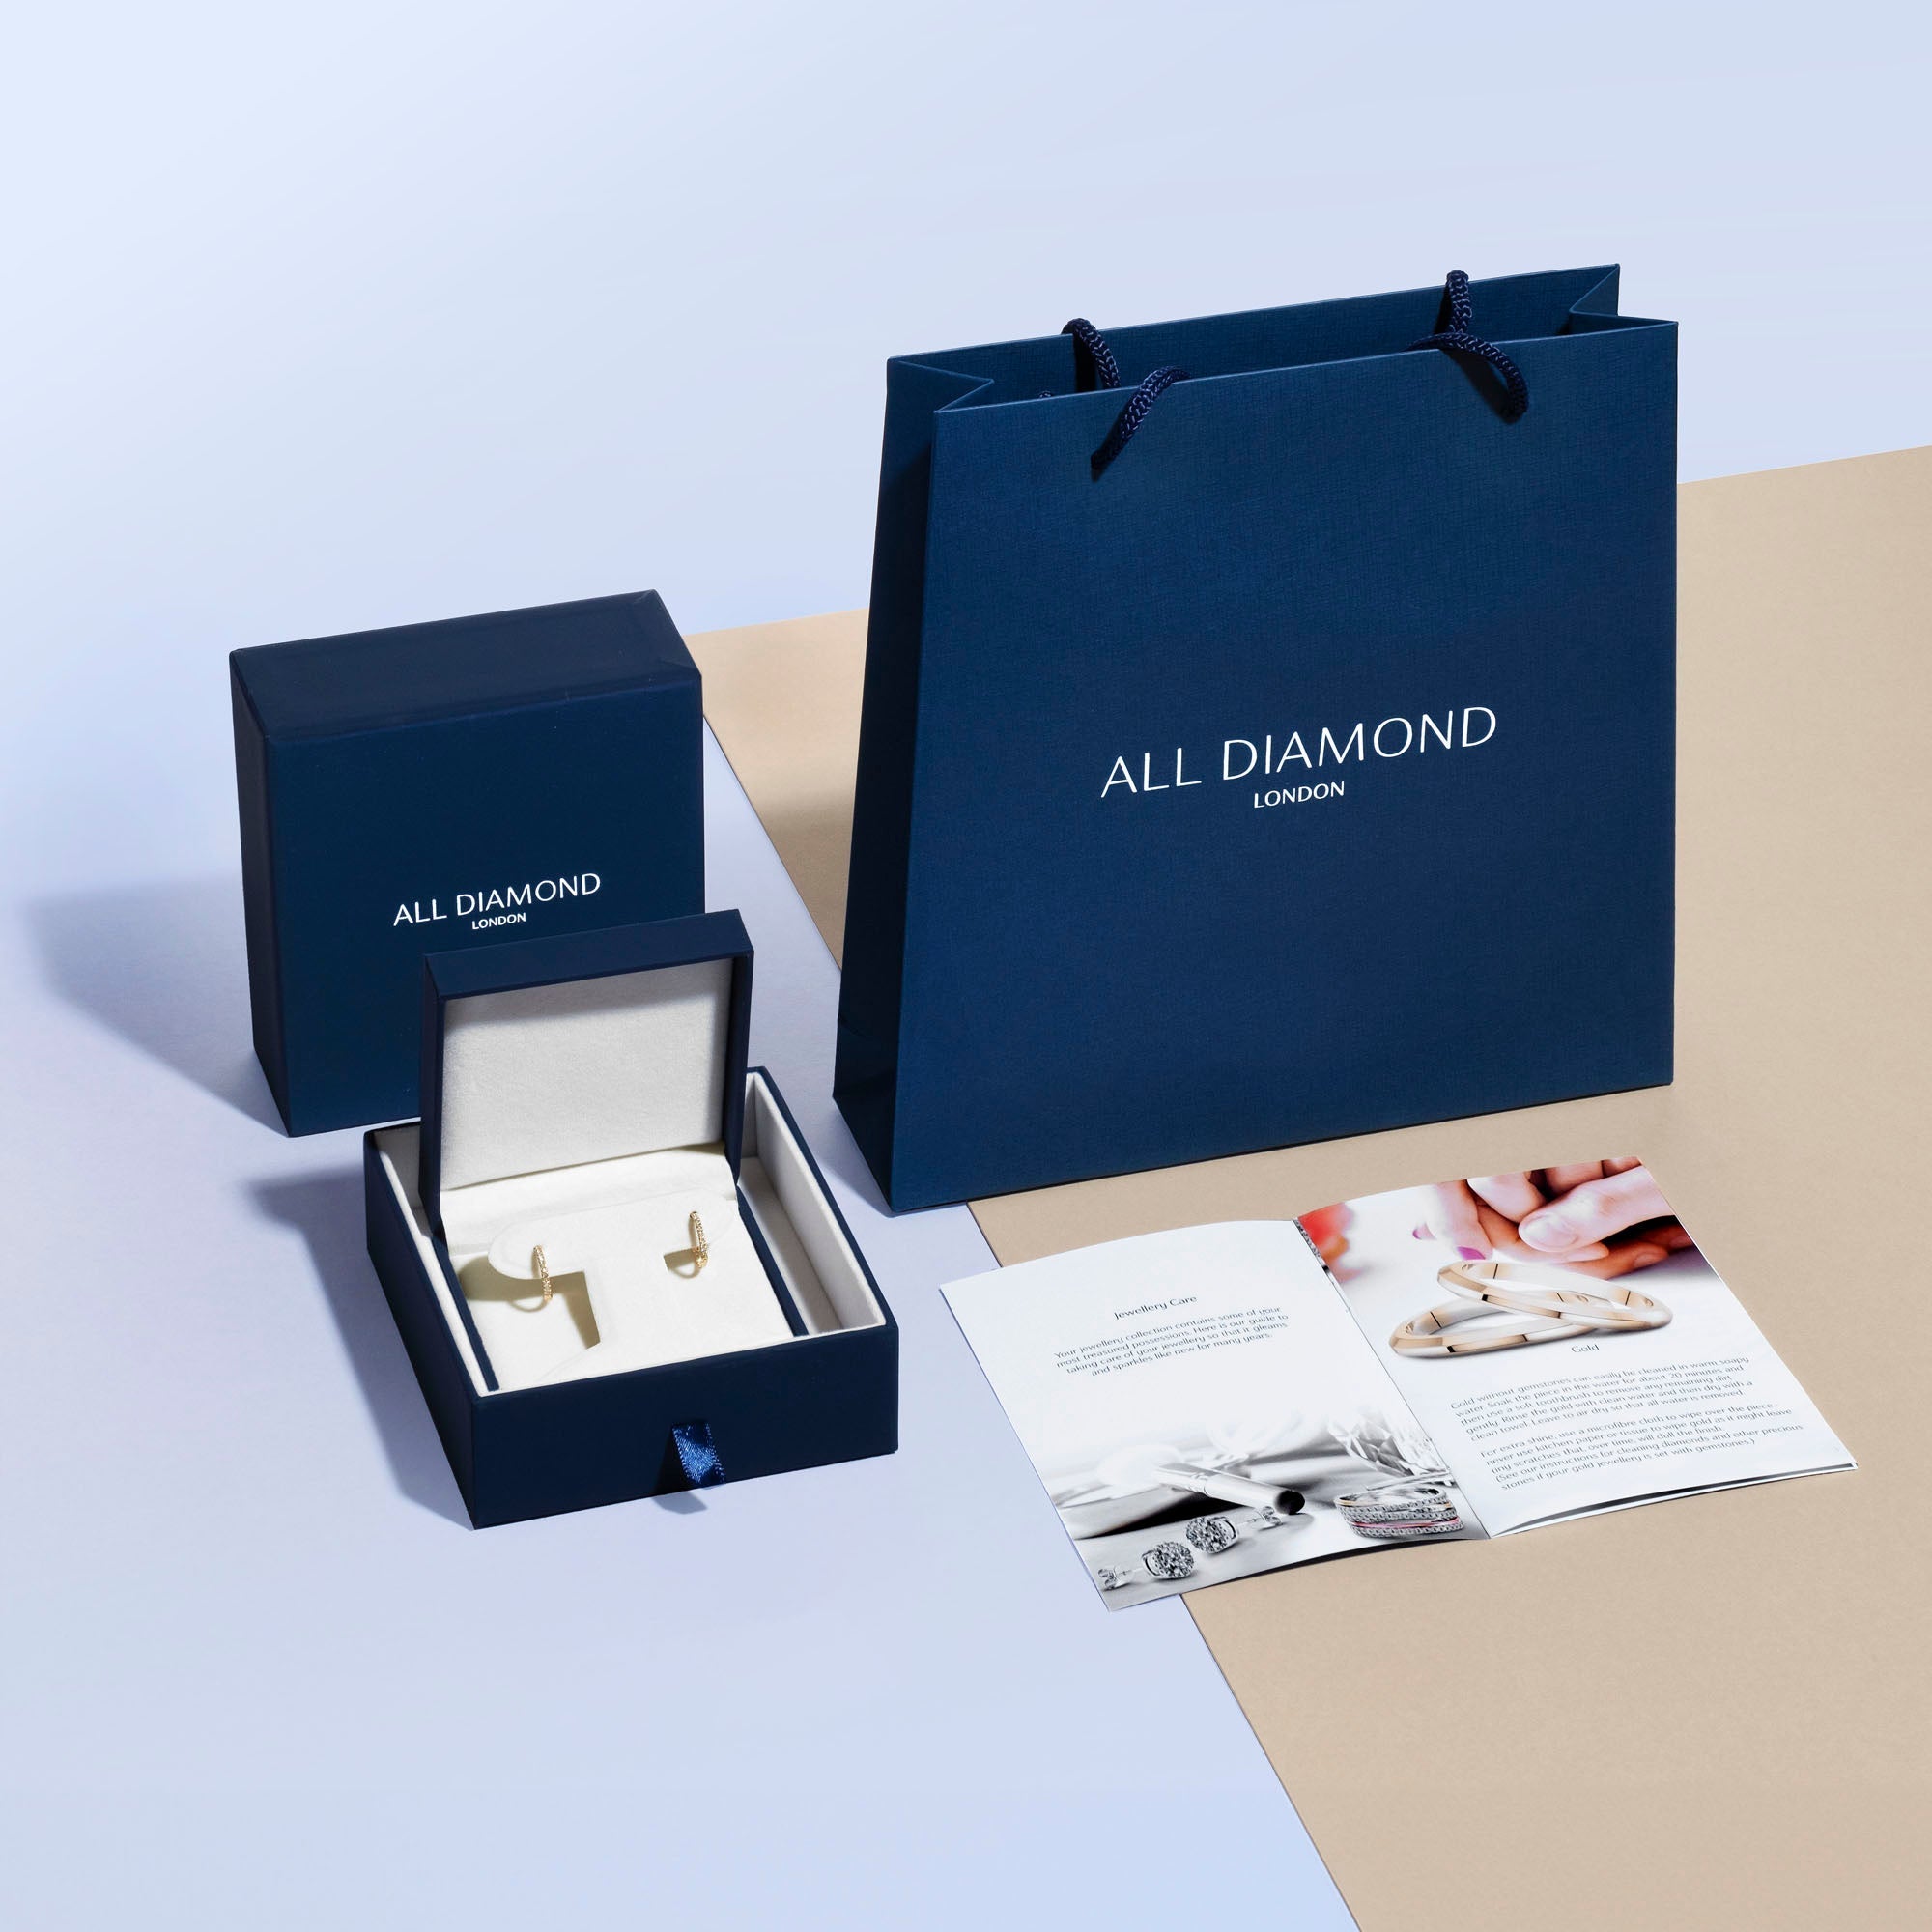 Oval 2.50ct Aquamarine & Diamond Halo Earrings in 18k Yellow Gold - All Diamond